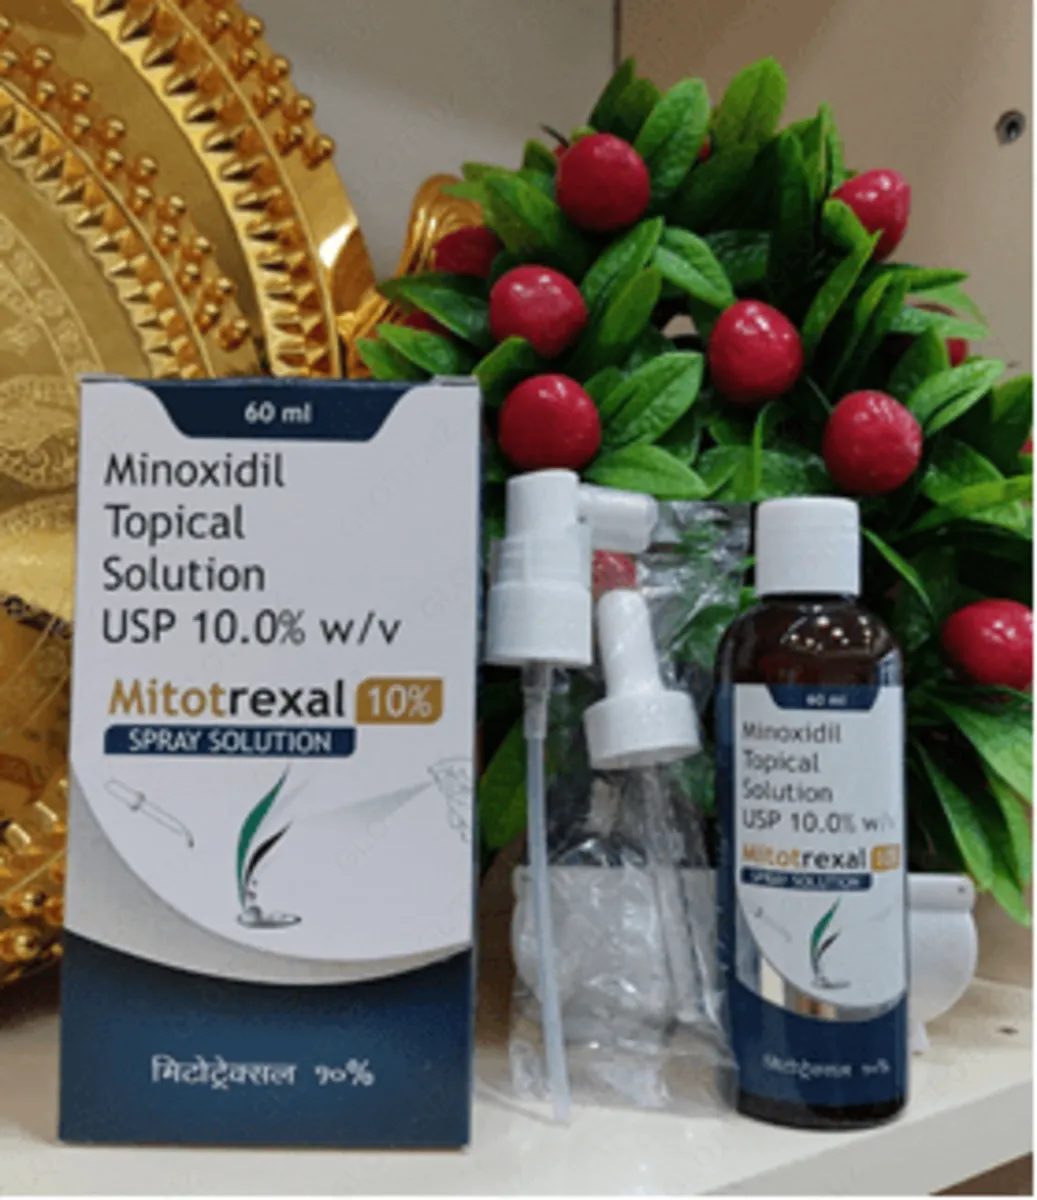 Minoxidil (Minoxytop) 10% - Препарат против облысения#2